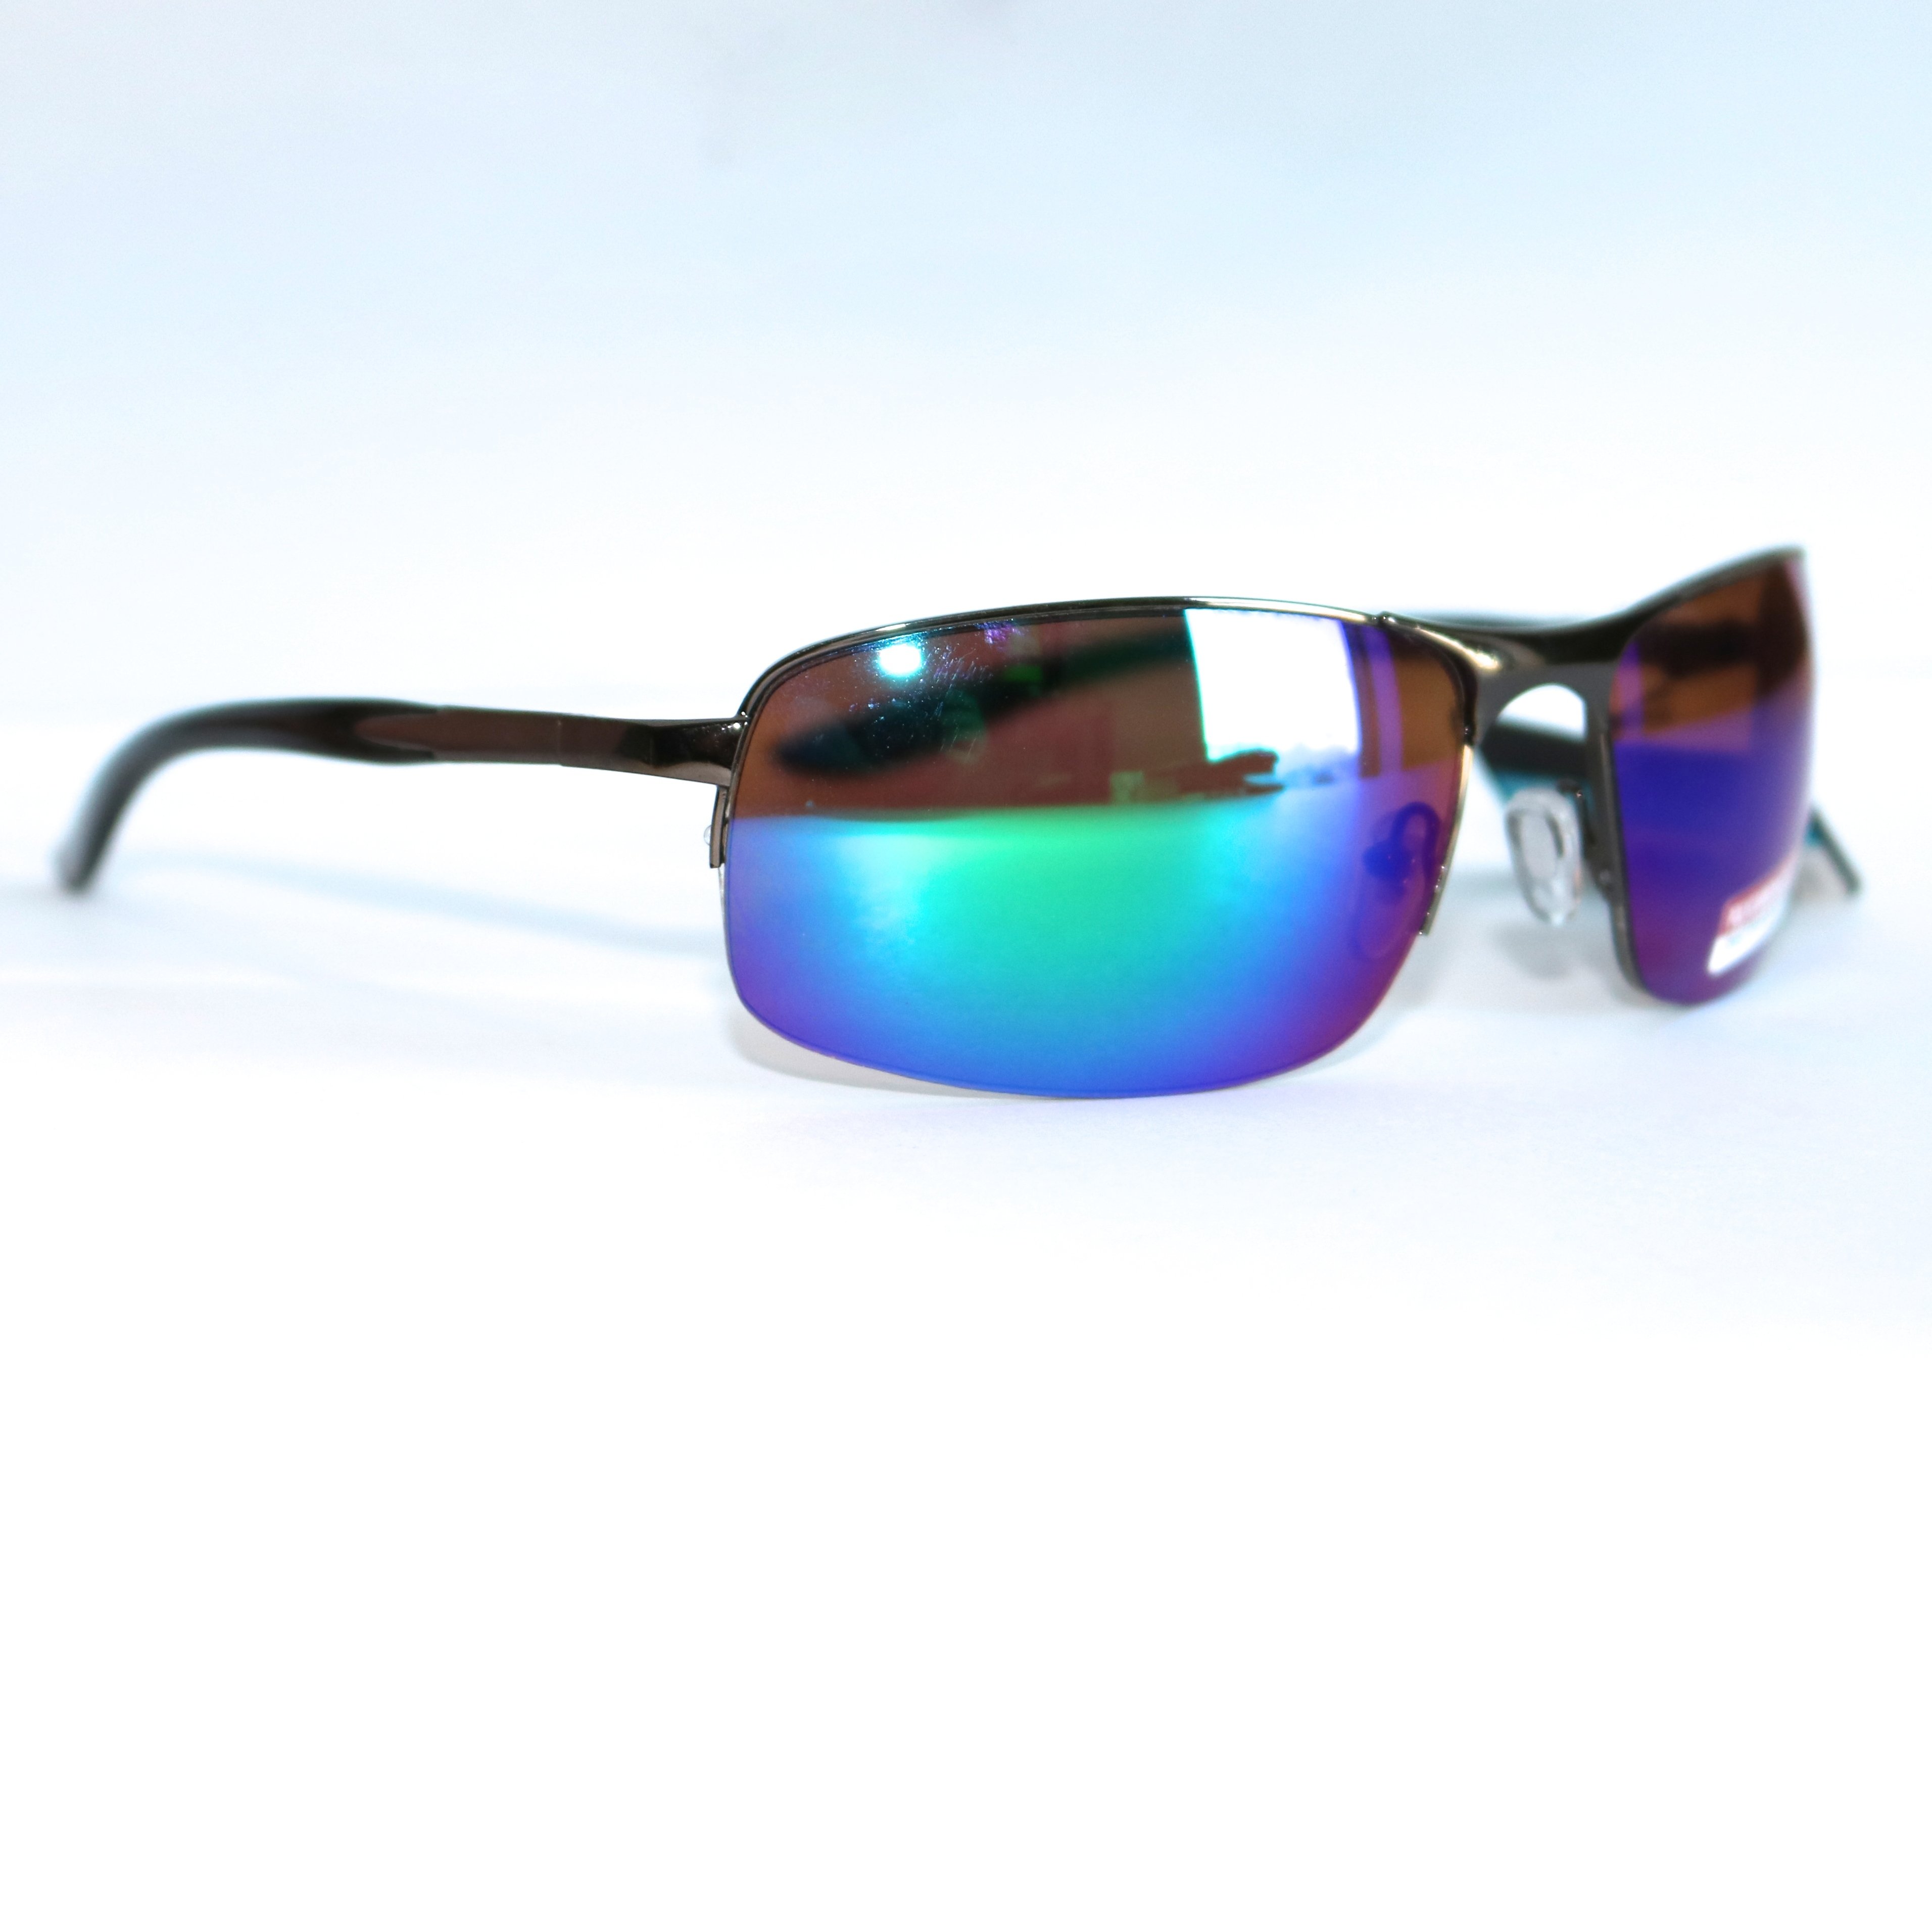 Piranha Sunglasses - Outdoors Geek